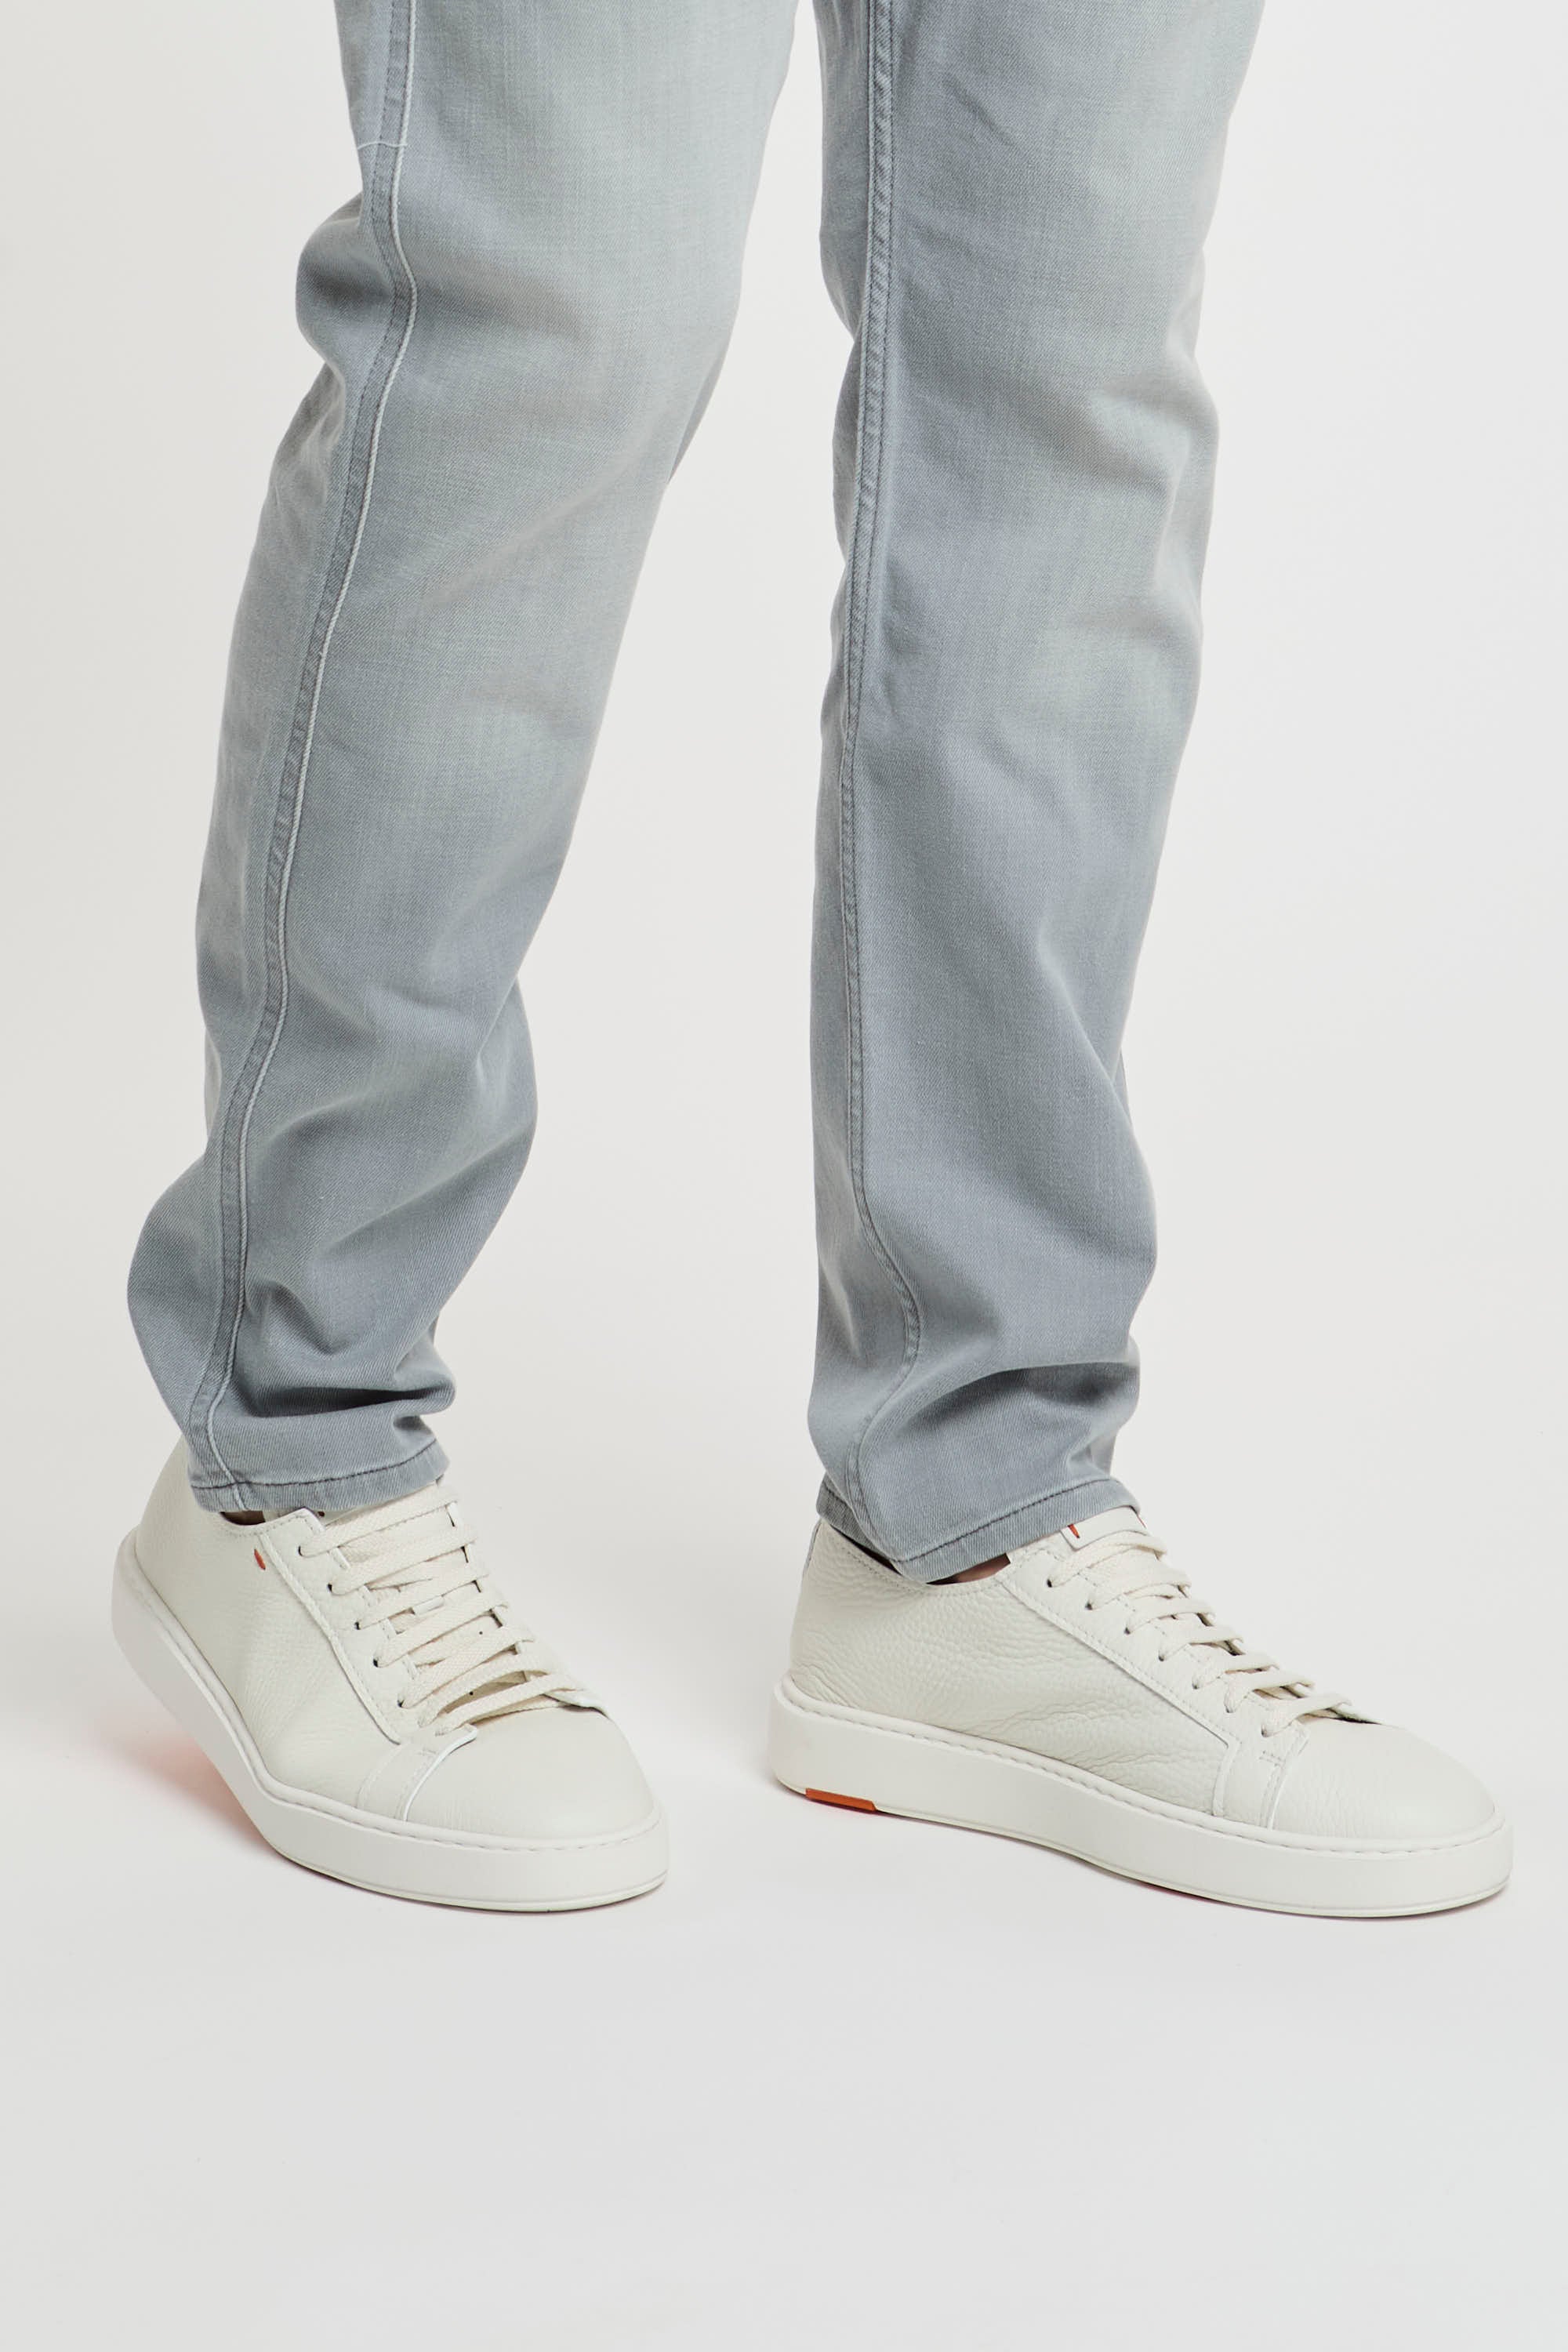 Replay Jeans Slim Fit Anbass aus Baumwolle/Elasthan in Hellgrau-7